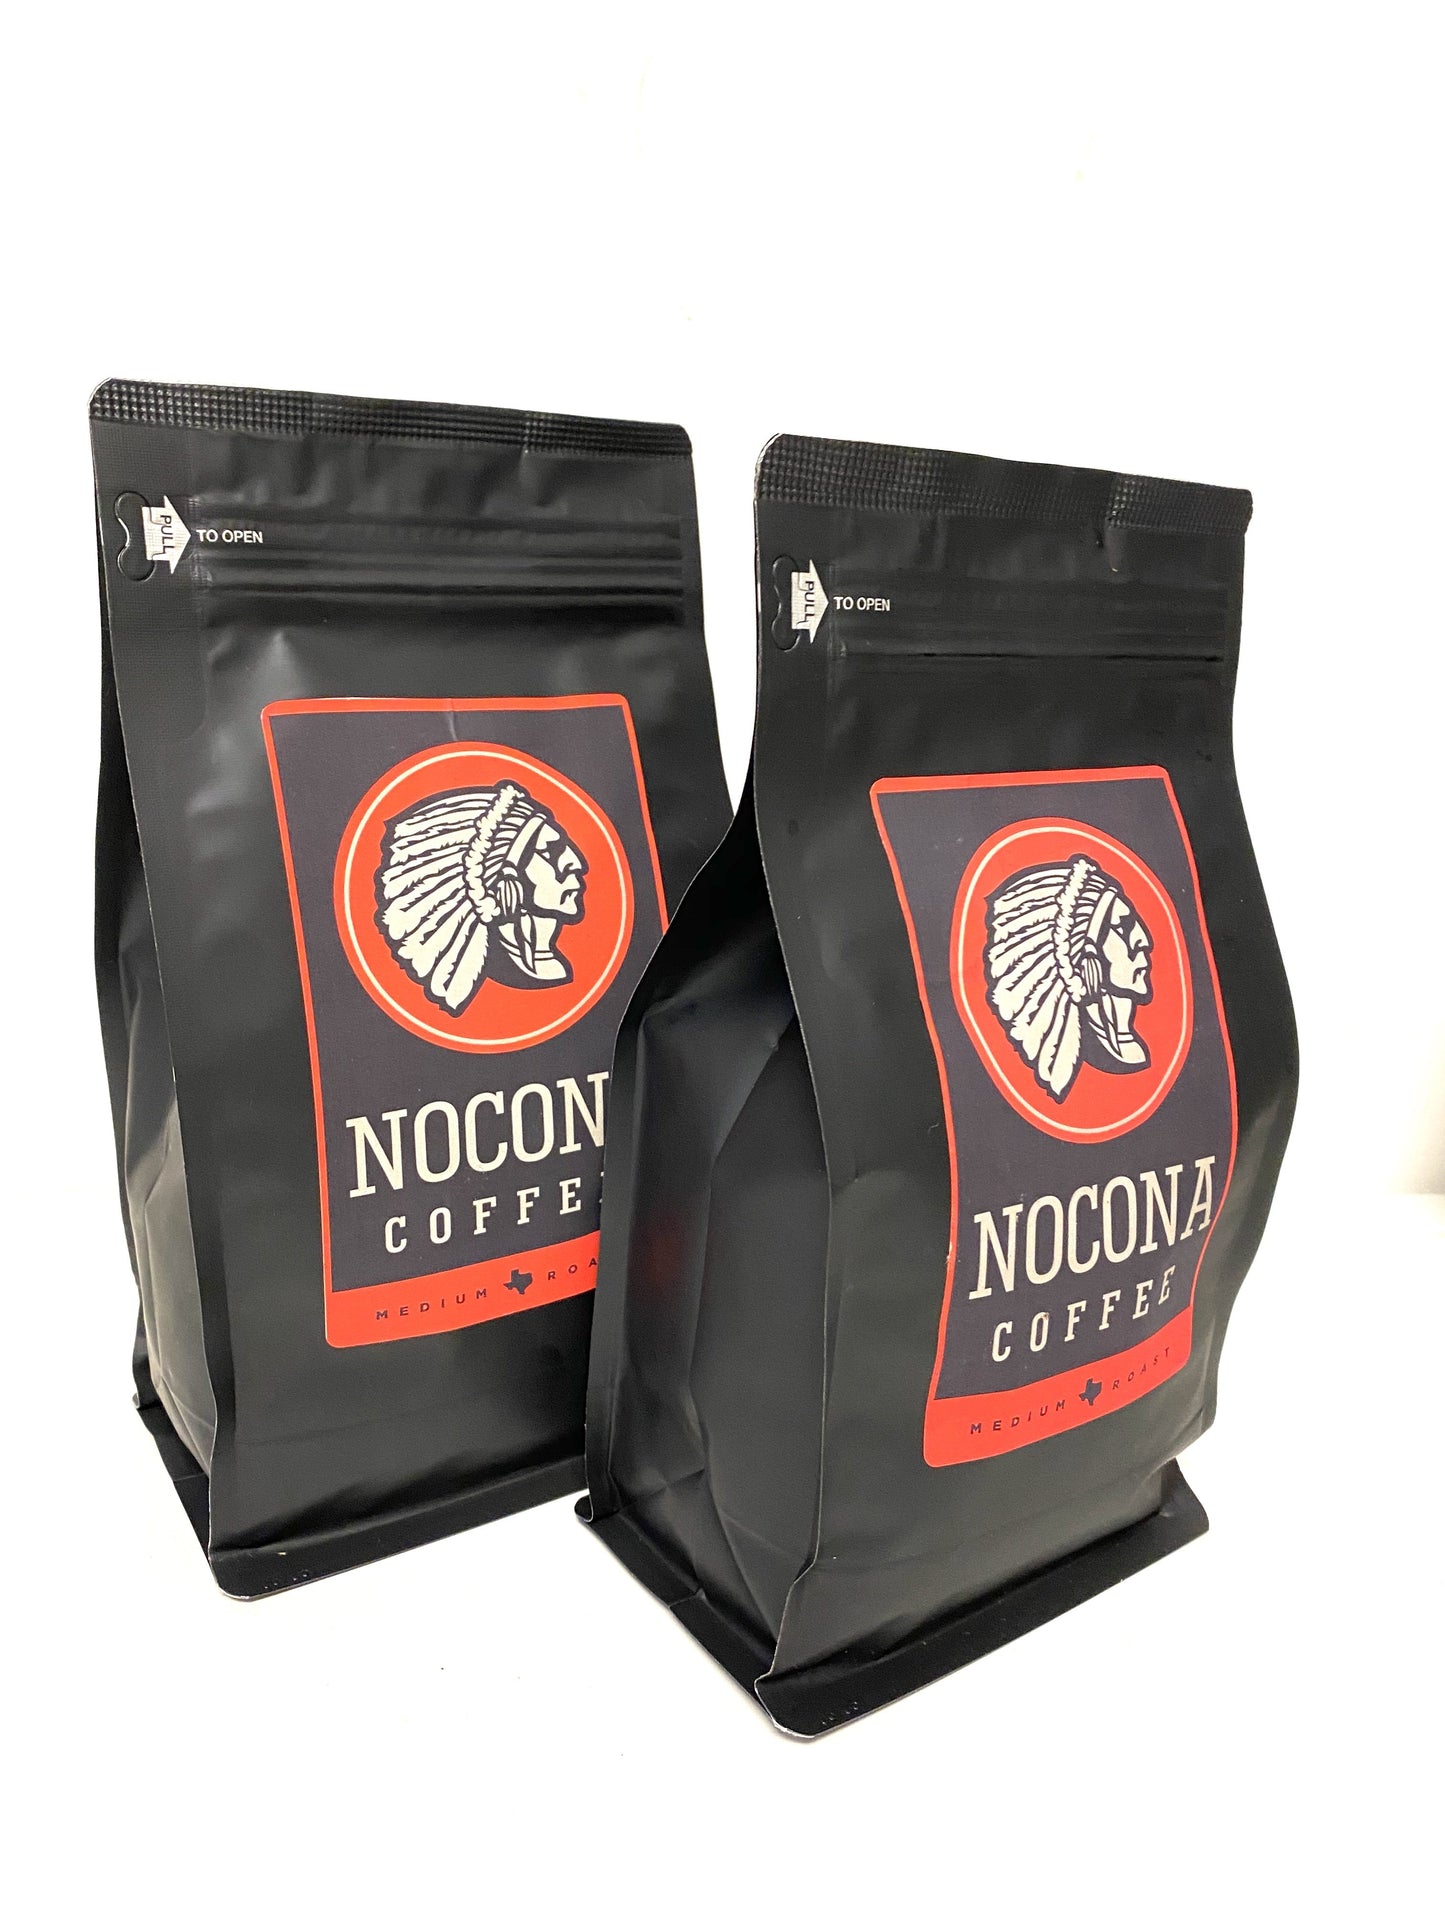 NC1001 Nocona Coffee MEDIUM ROAST 12 oz Bag - GROUND